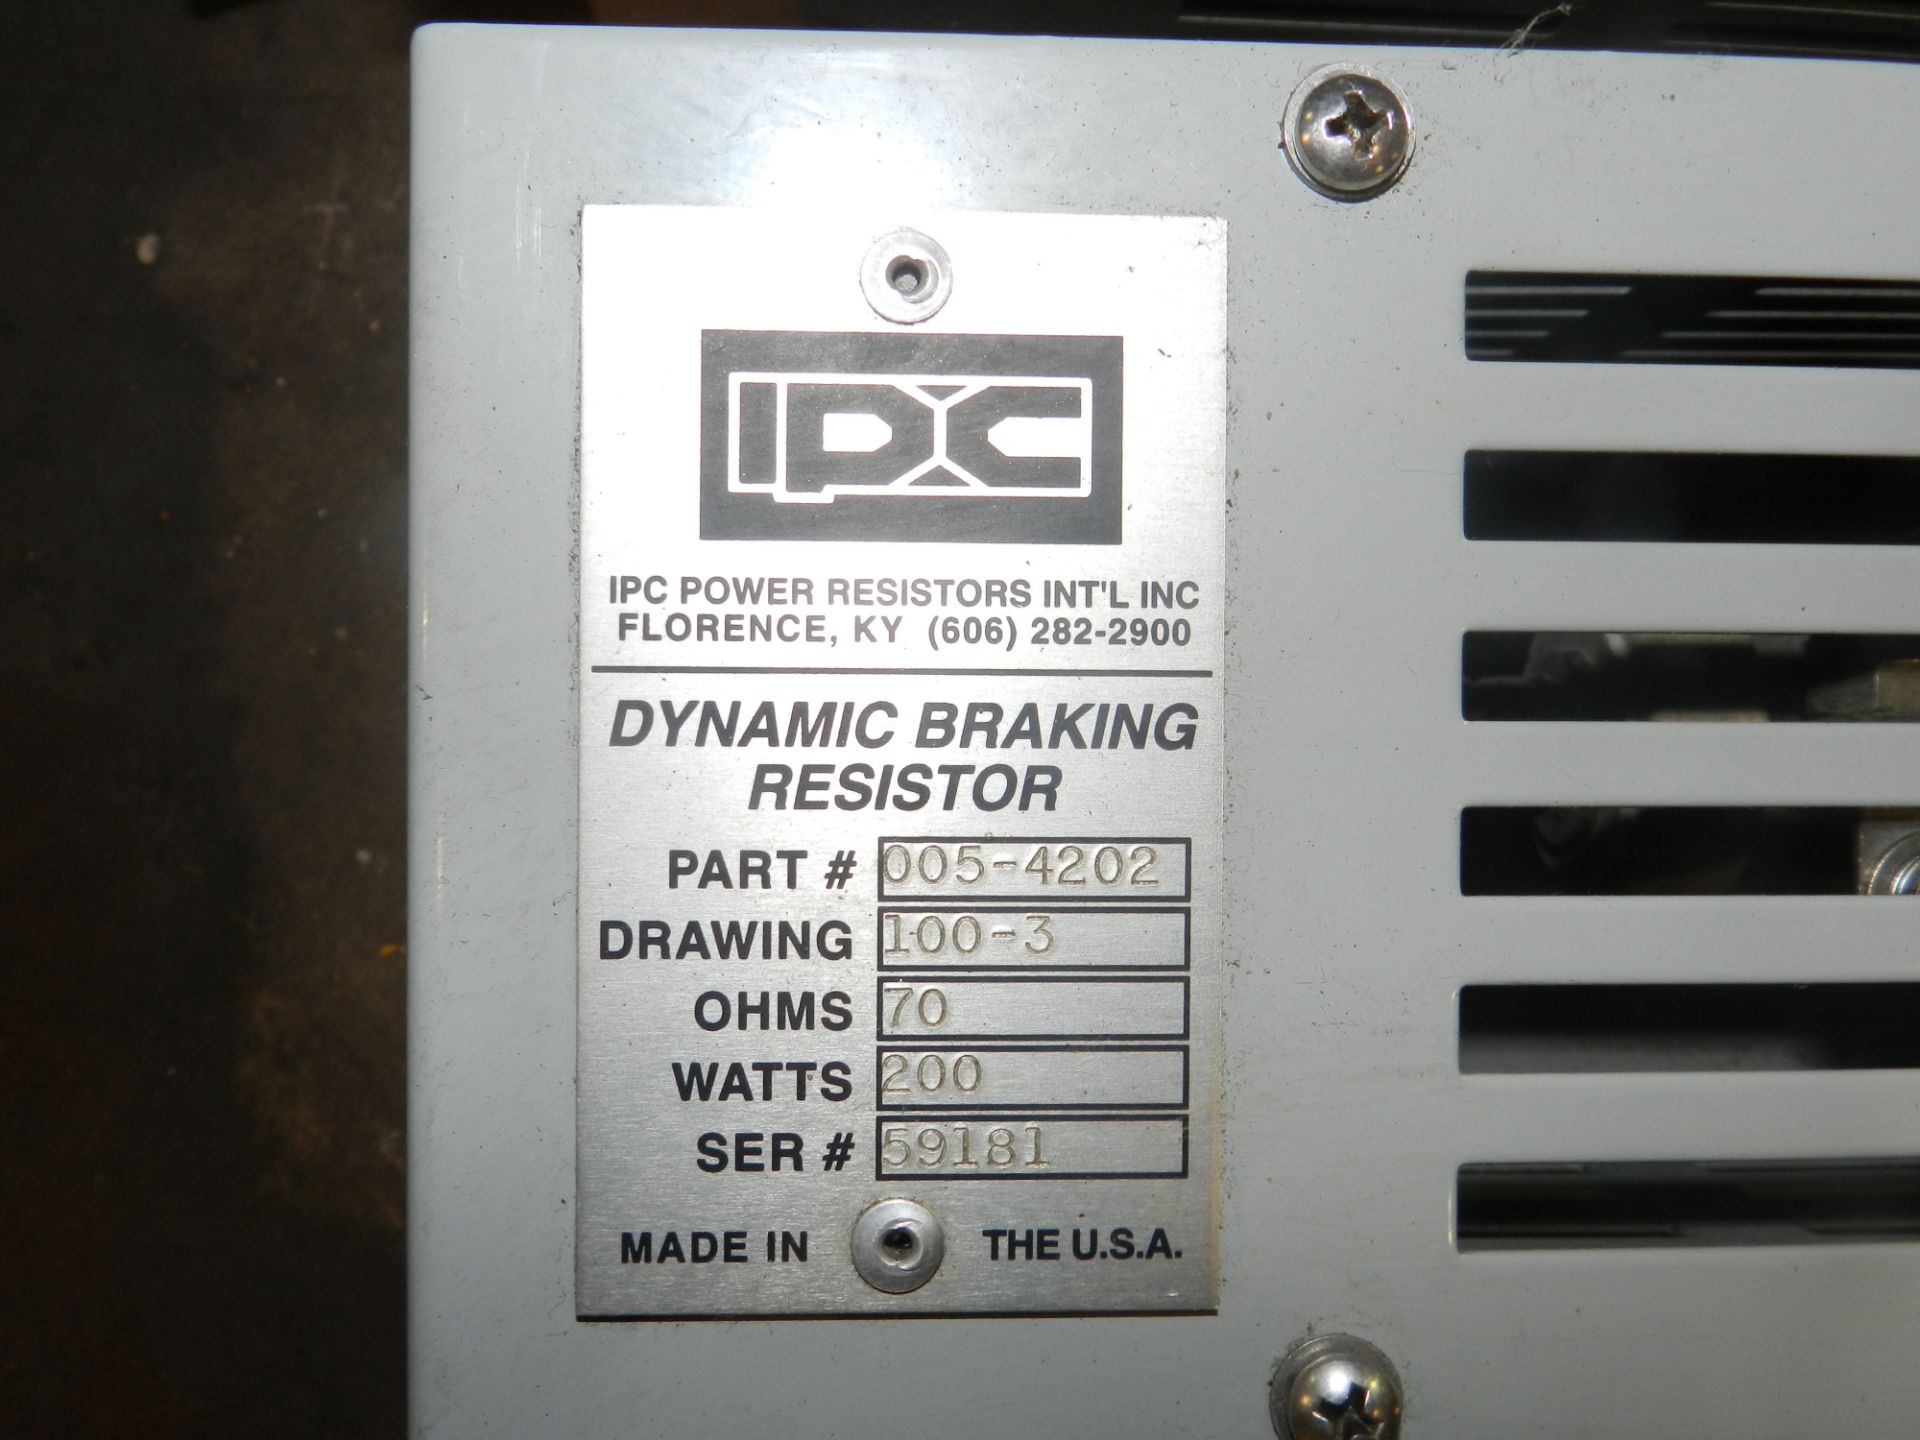 Lot of 4 - IPC 005-4202 Dynamic Braking Resistor 70 OHMS, 200 Watts - Image 2 of 3